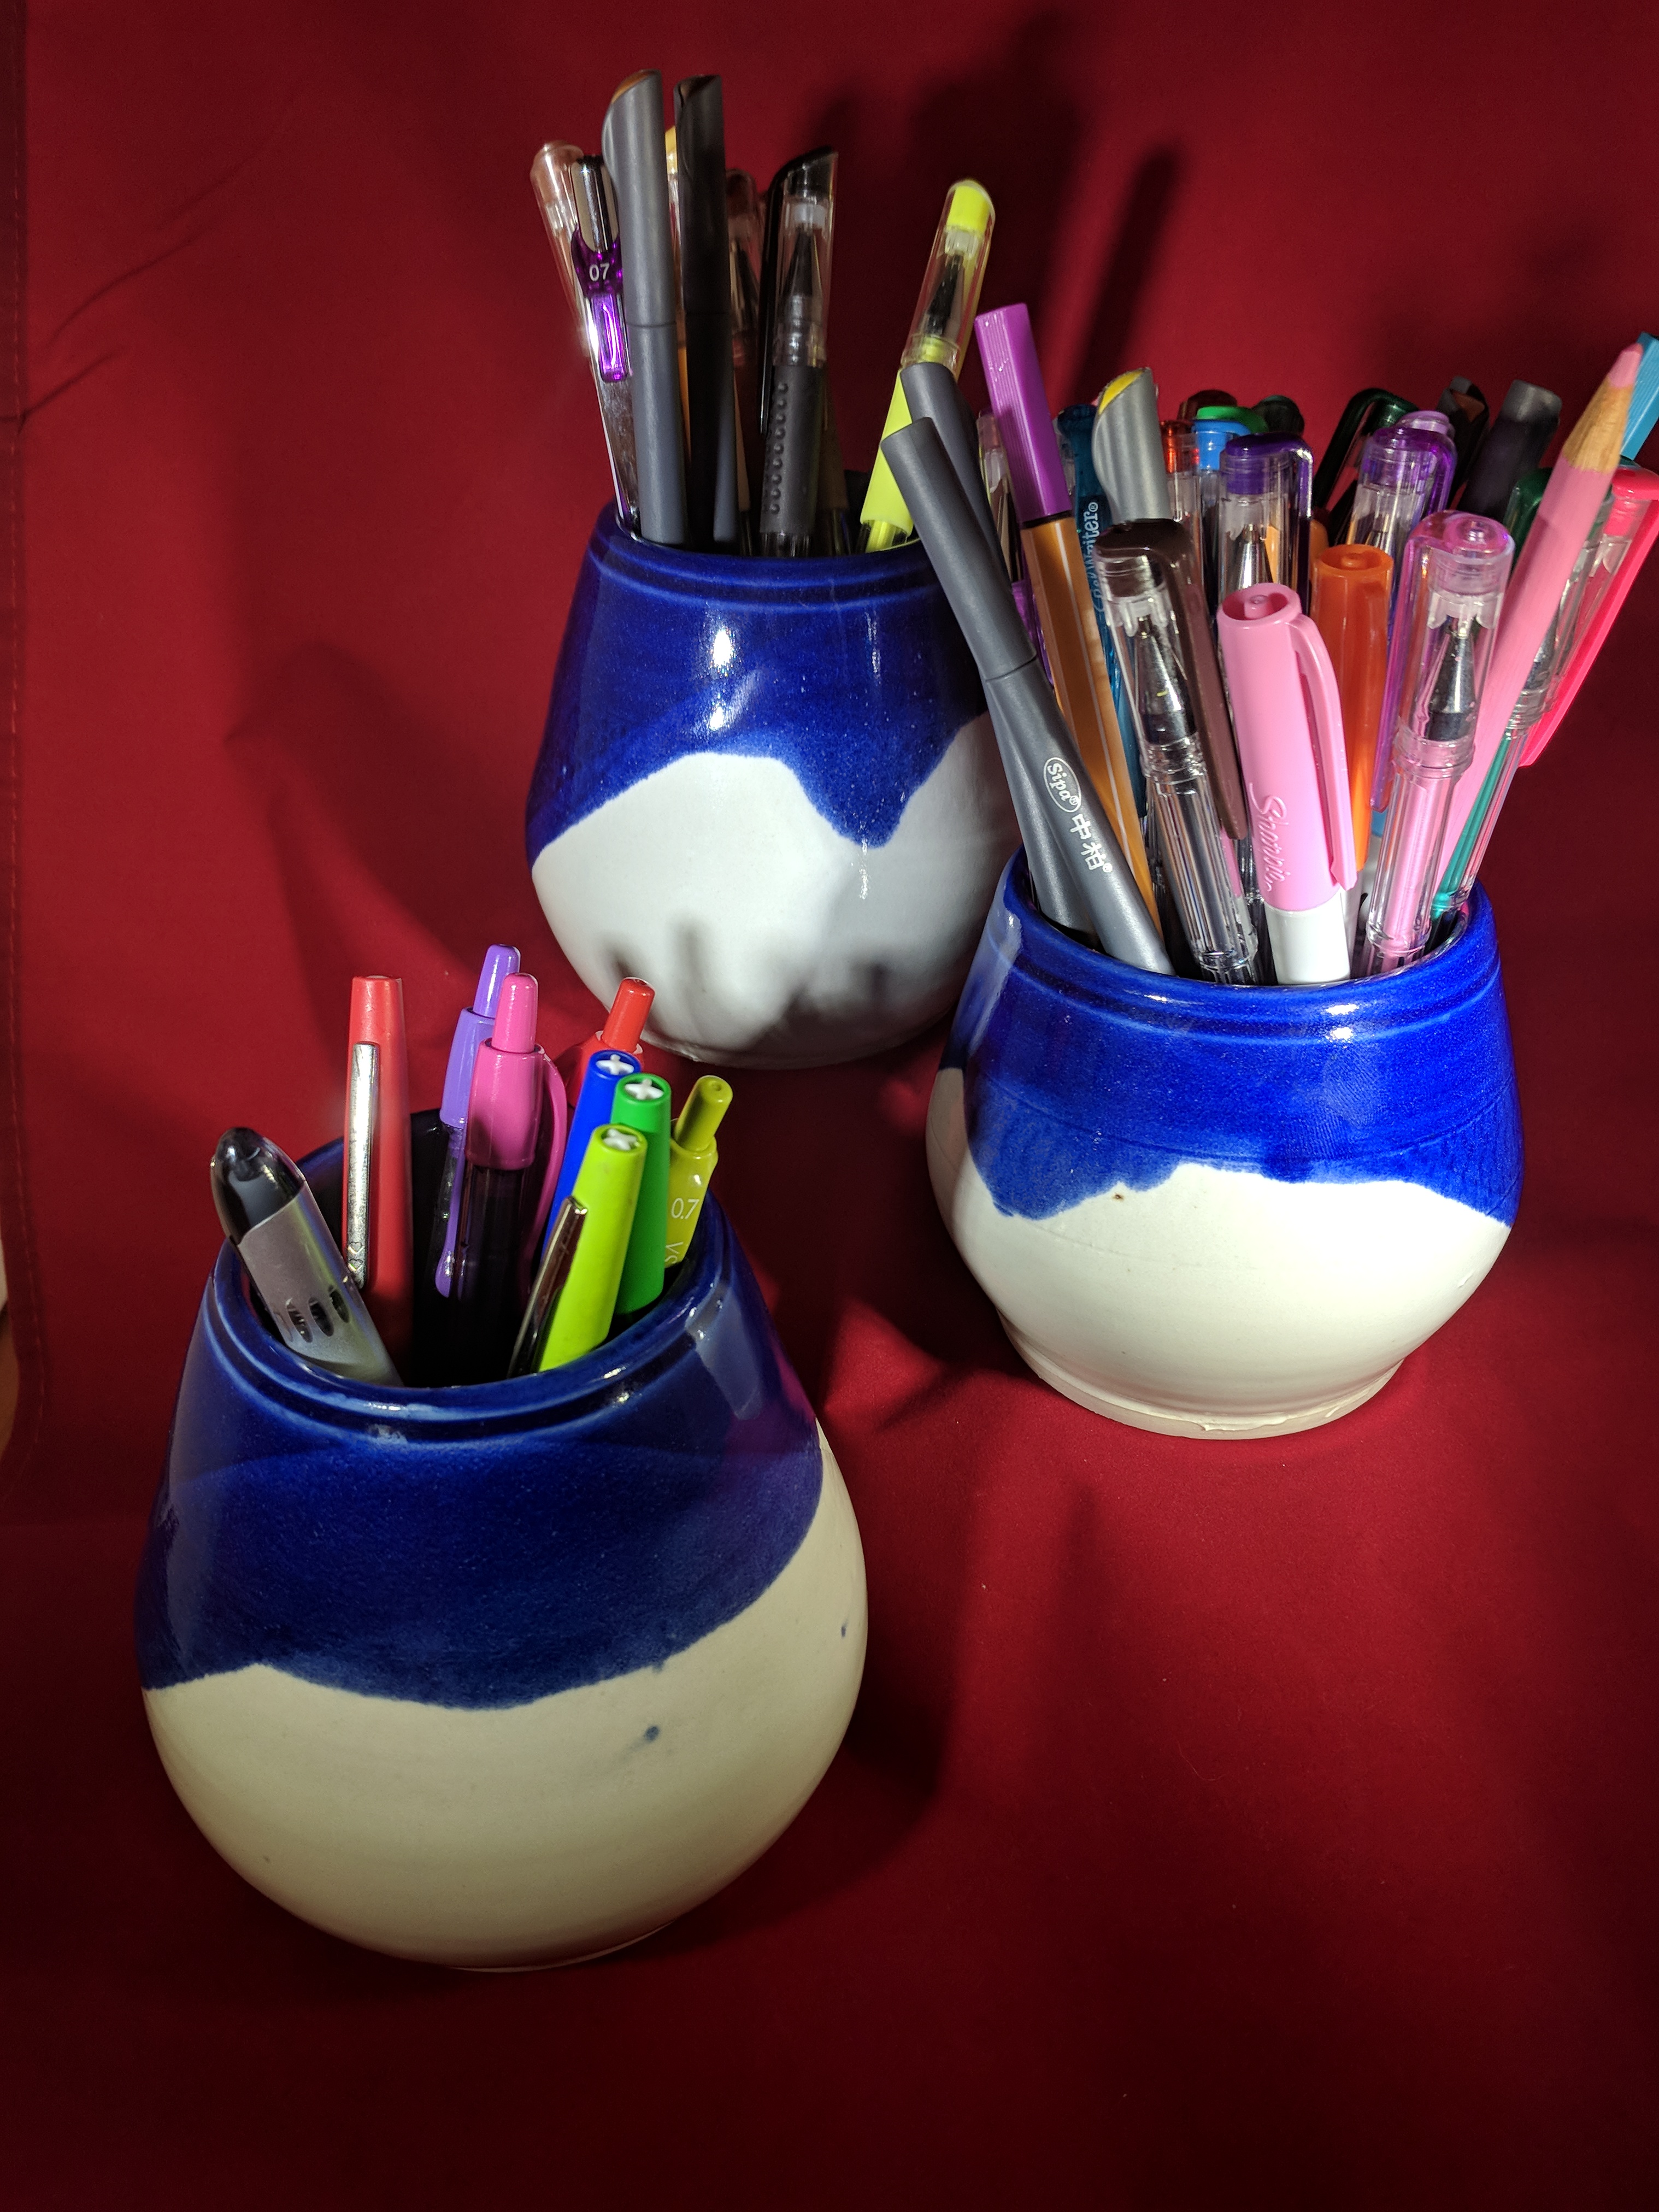 3 Cobalt and white porcelain pencil/pen holders